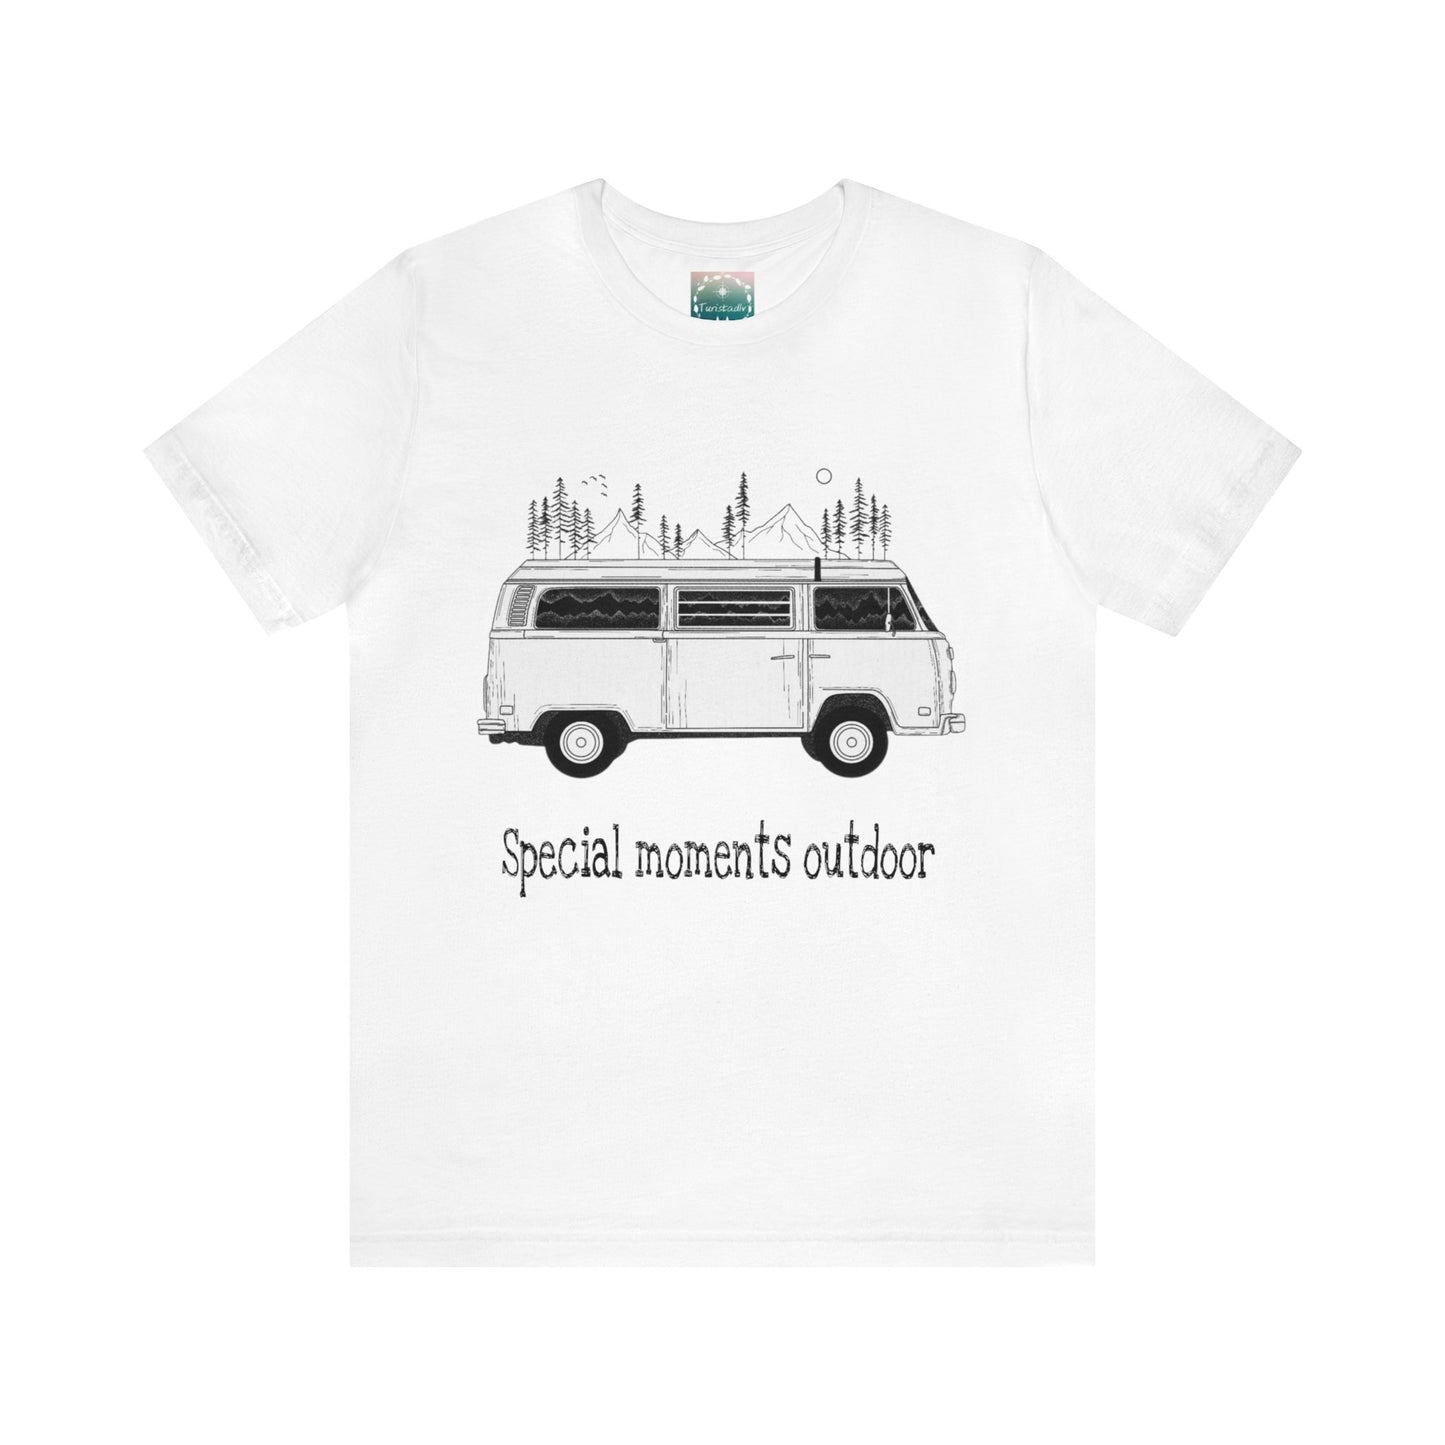 Camiseta de viajero, camiseta camioneta, regalo de van, ropa camper, camiseta de viaje, regalo viajes, camiseta aventurero, regalo viajero